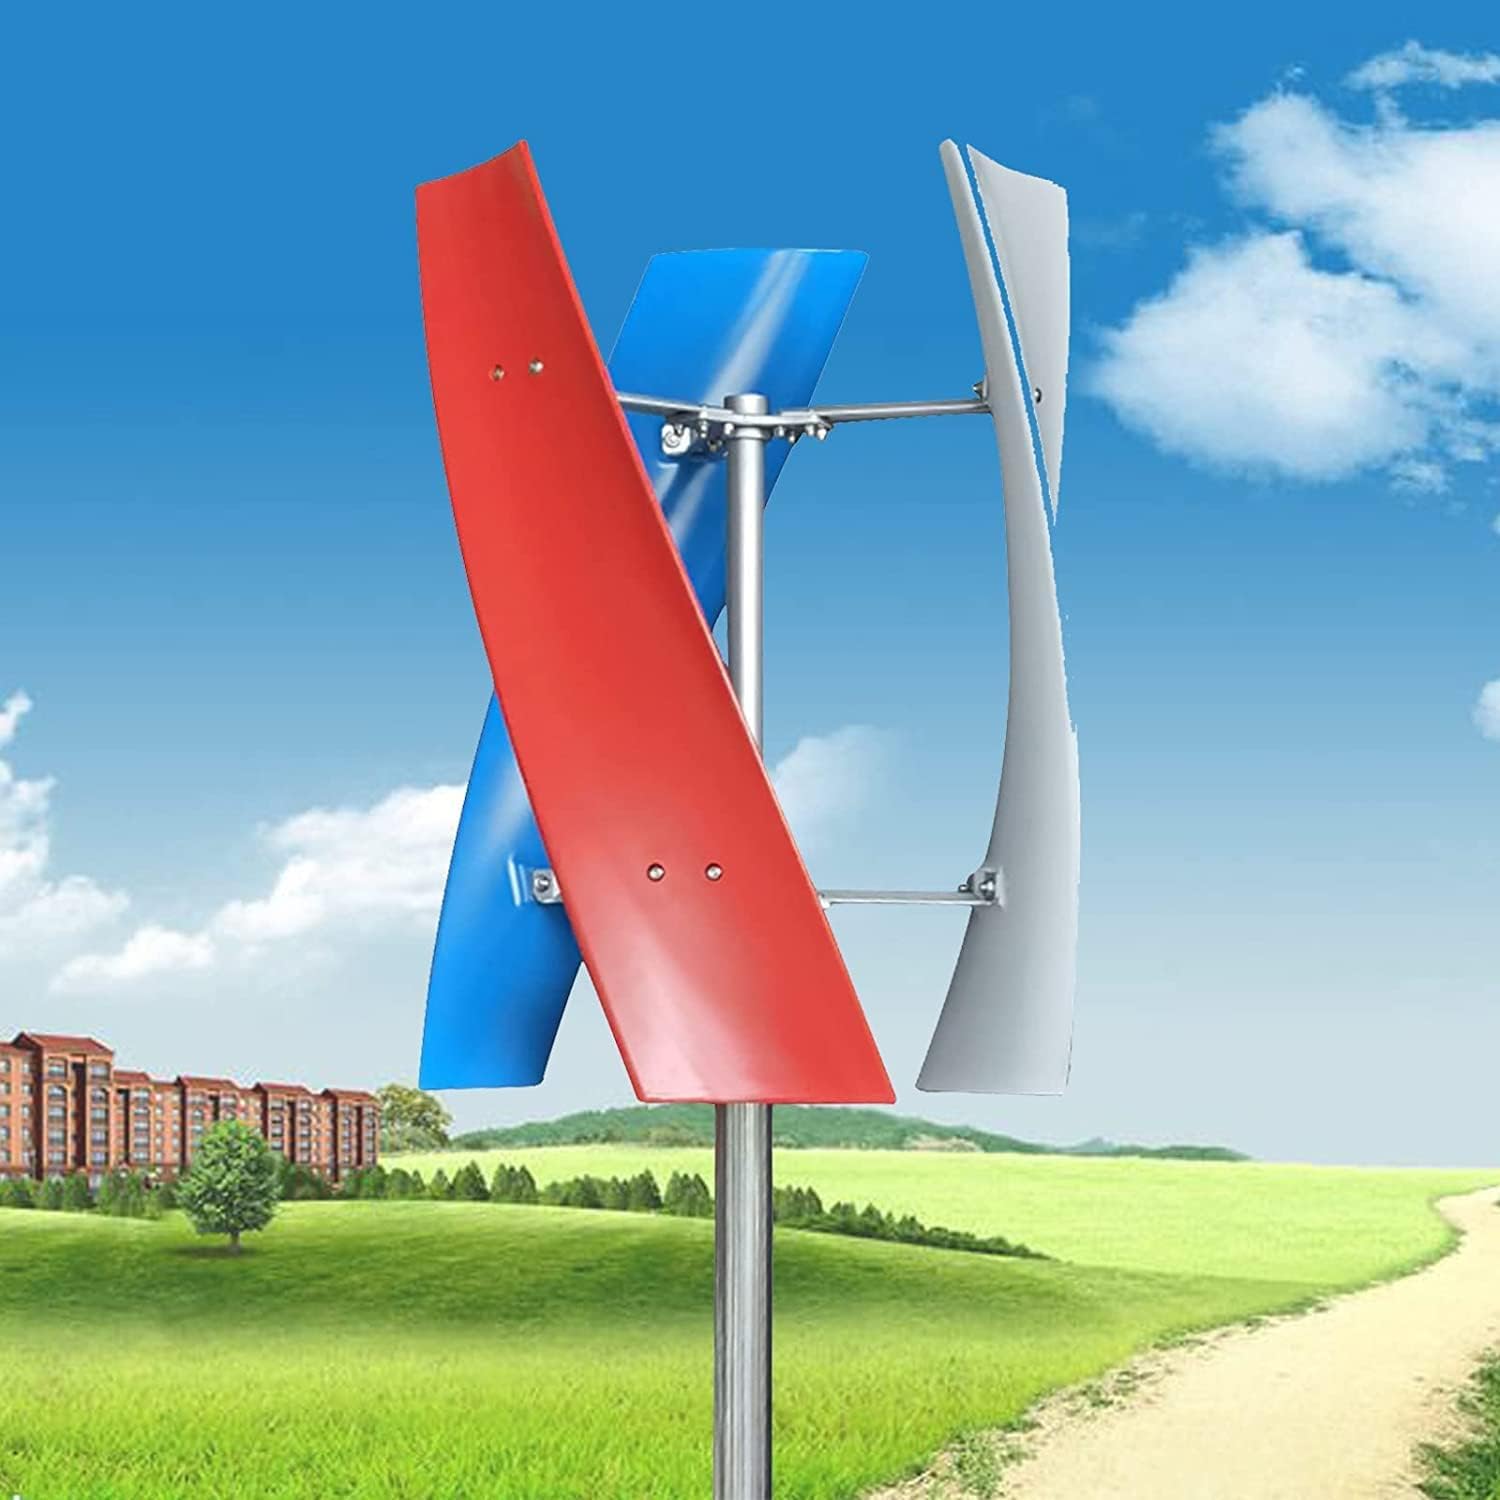 Wind Turbine Generator Kit 400W 12V, Wind Turbine Generator Power Kit for Marine, RV, Home, Windmill Generator Suit for Hybrid Solar Wind System